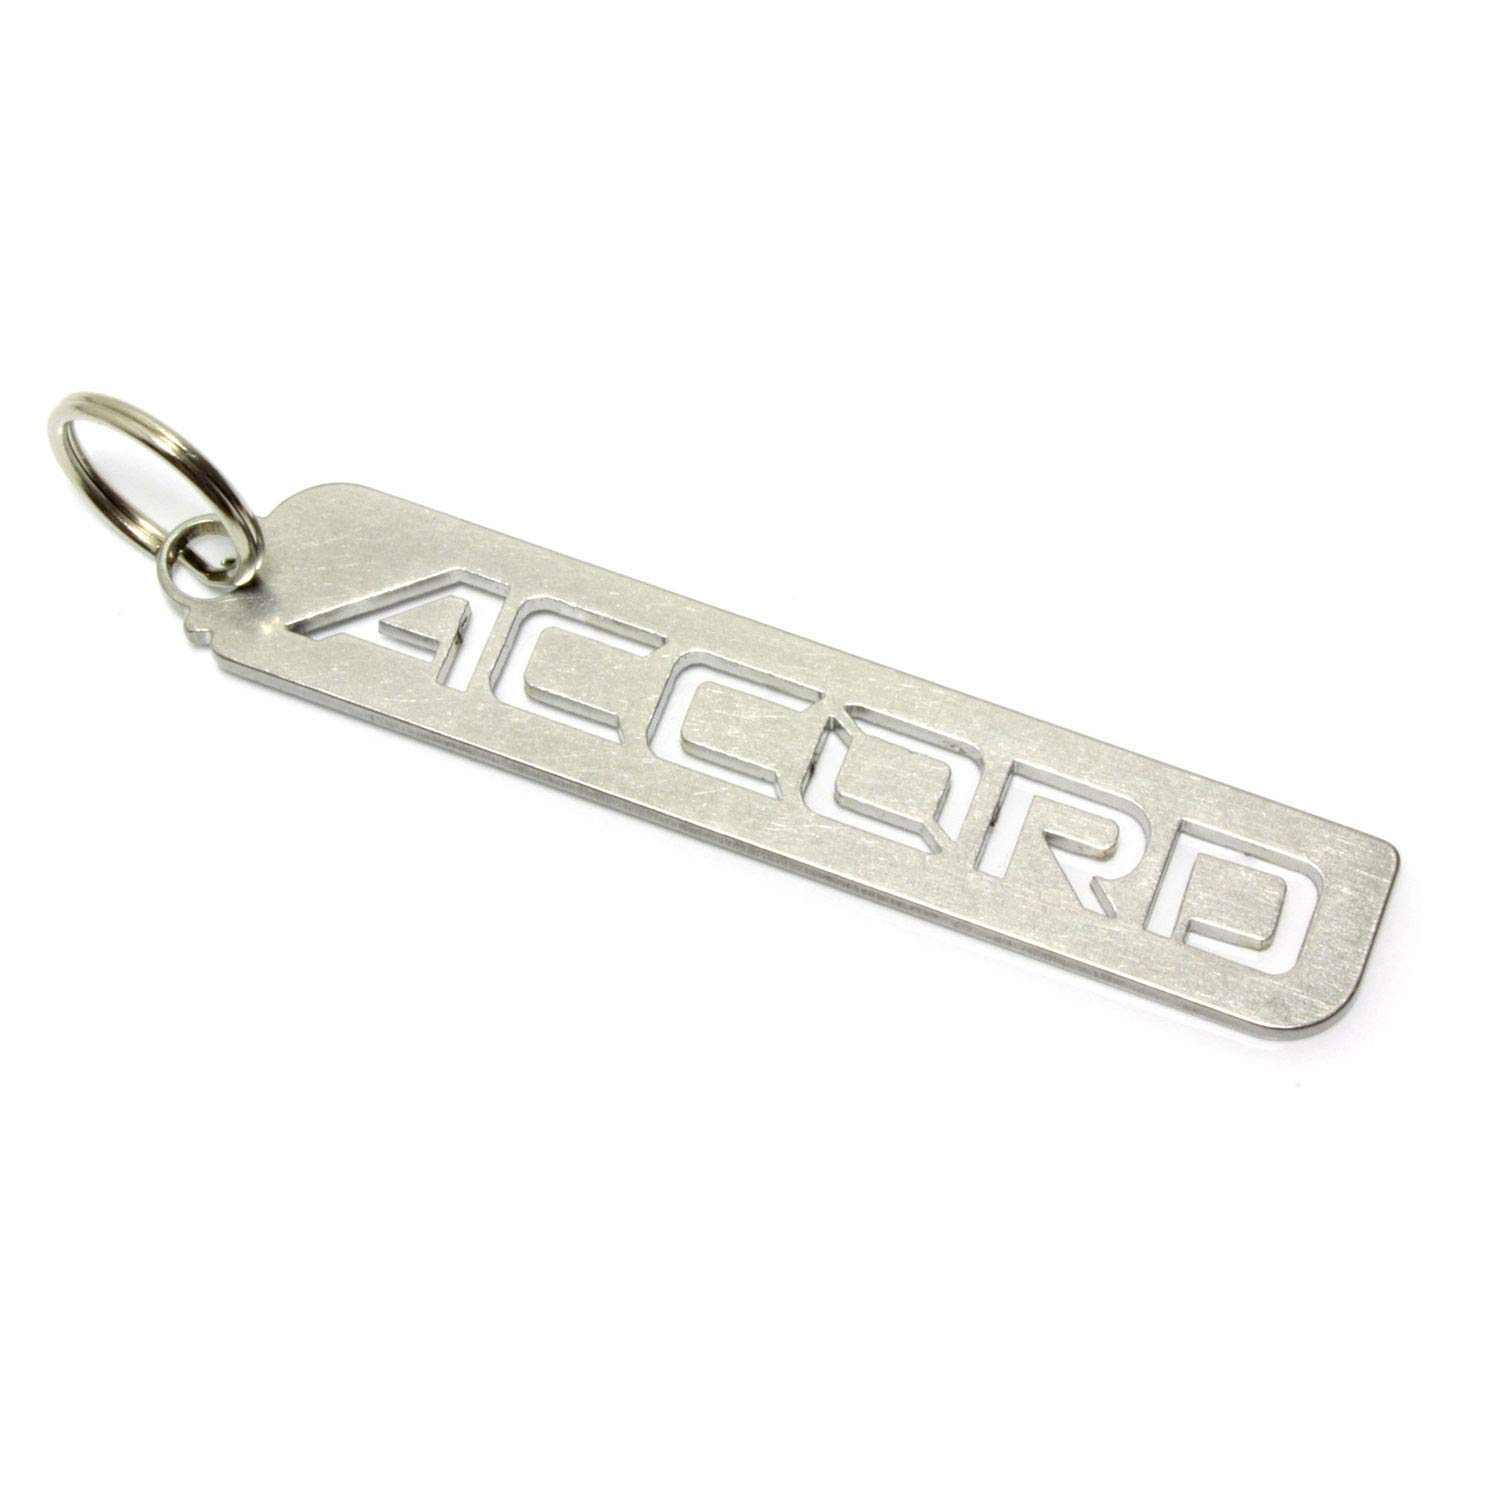 Accord Schlüsselanhänger Keyring Pendant Cl7 Cl9 Cg8 Tourer Coupe CdTi - Dub von DUB SPENCER